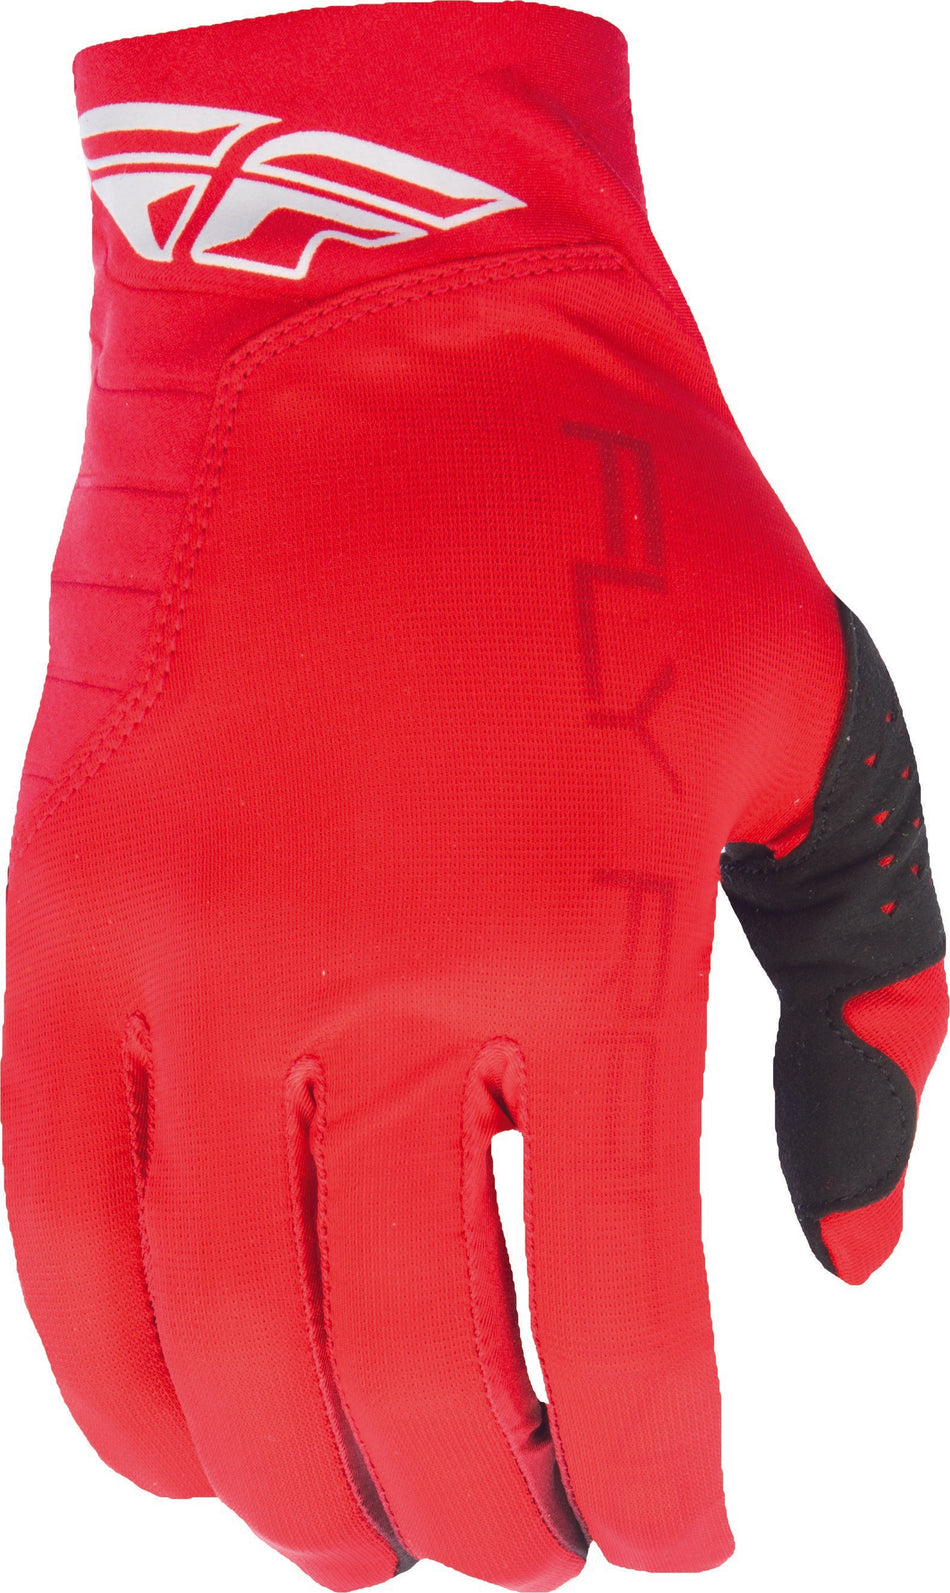 FLY RACING Pro Lite Glove Red Sz 11 X 370-81211